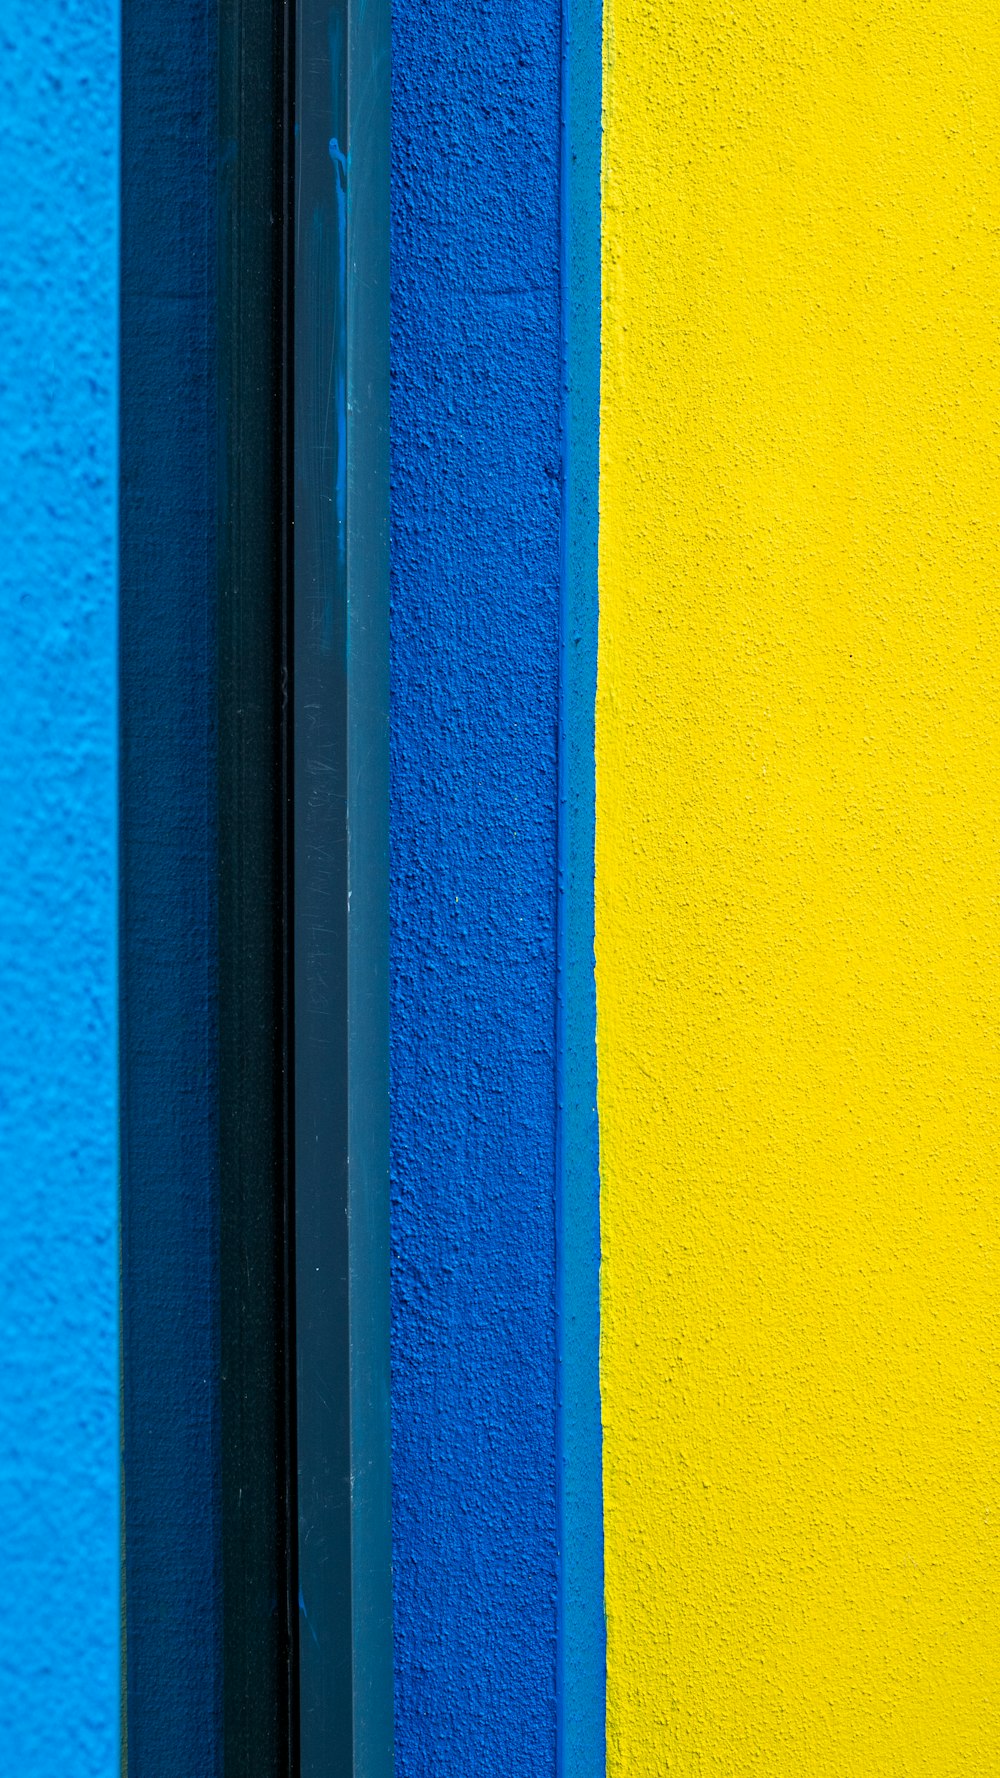 blau und grau gestrichene Wand